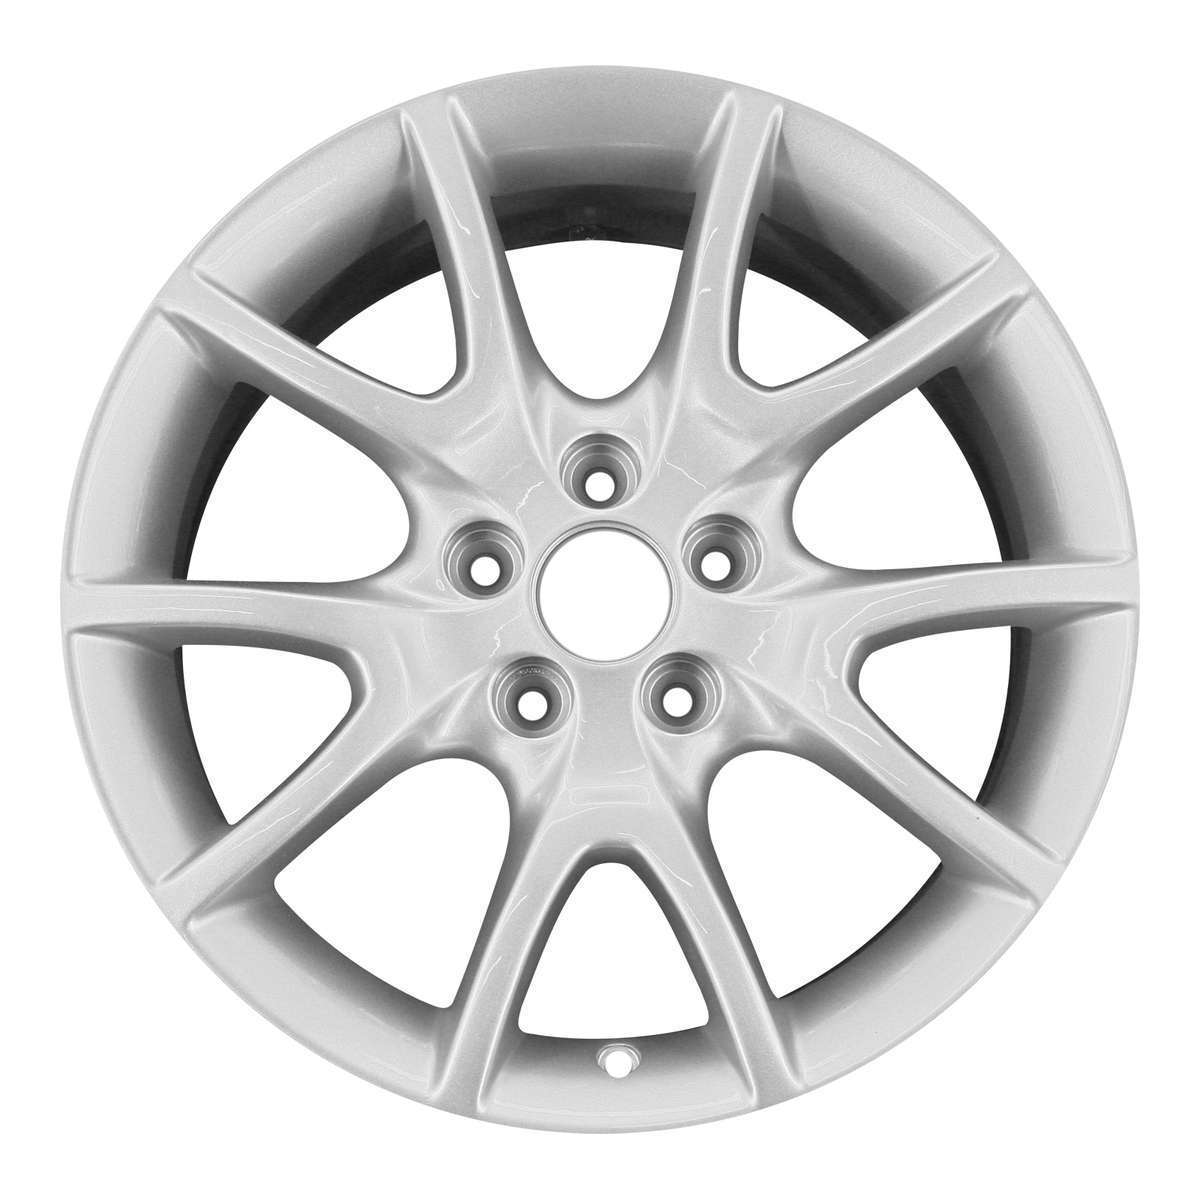 2015 Dodge Dart New 17" Replacement Wheel Rim RW2481S